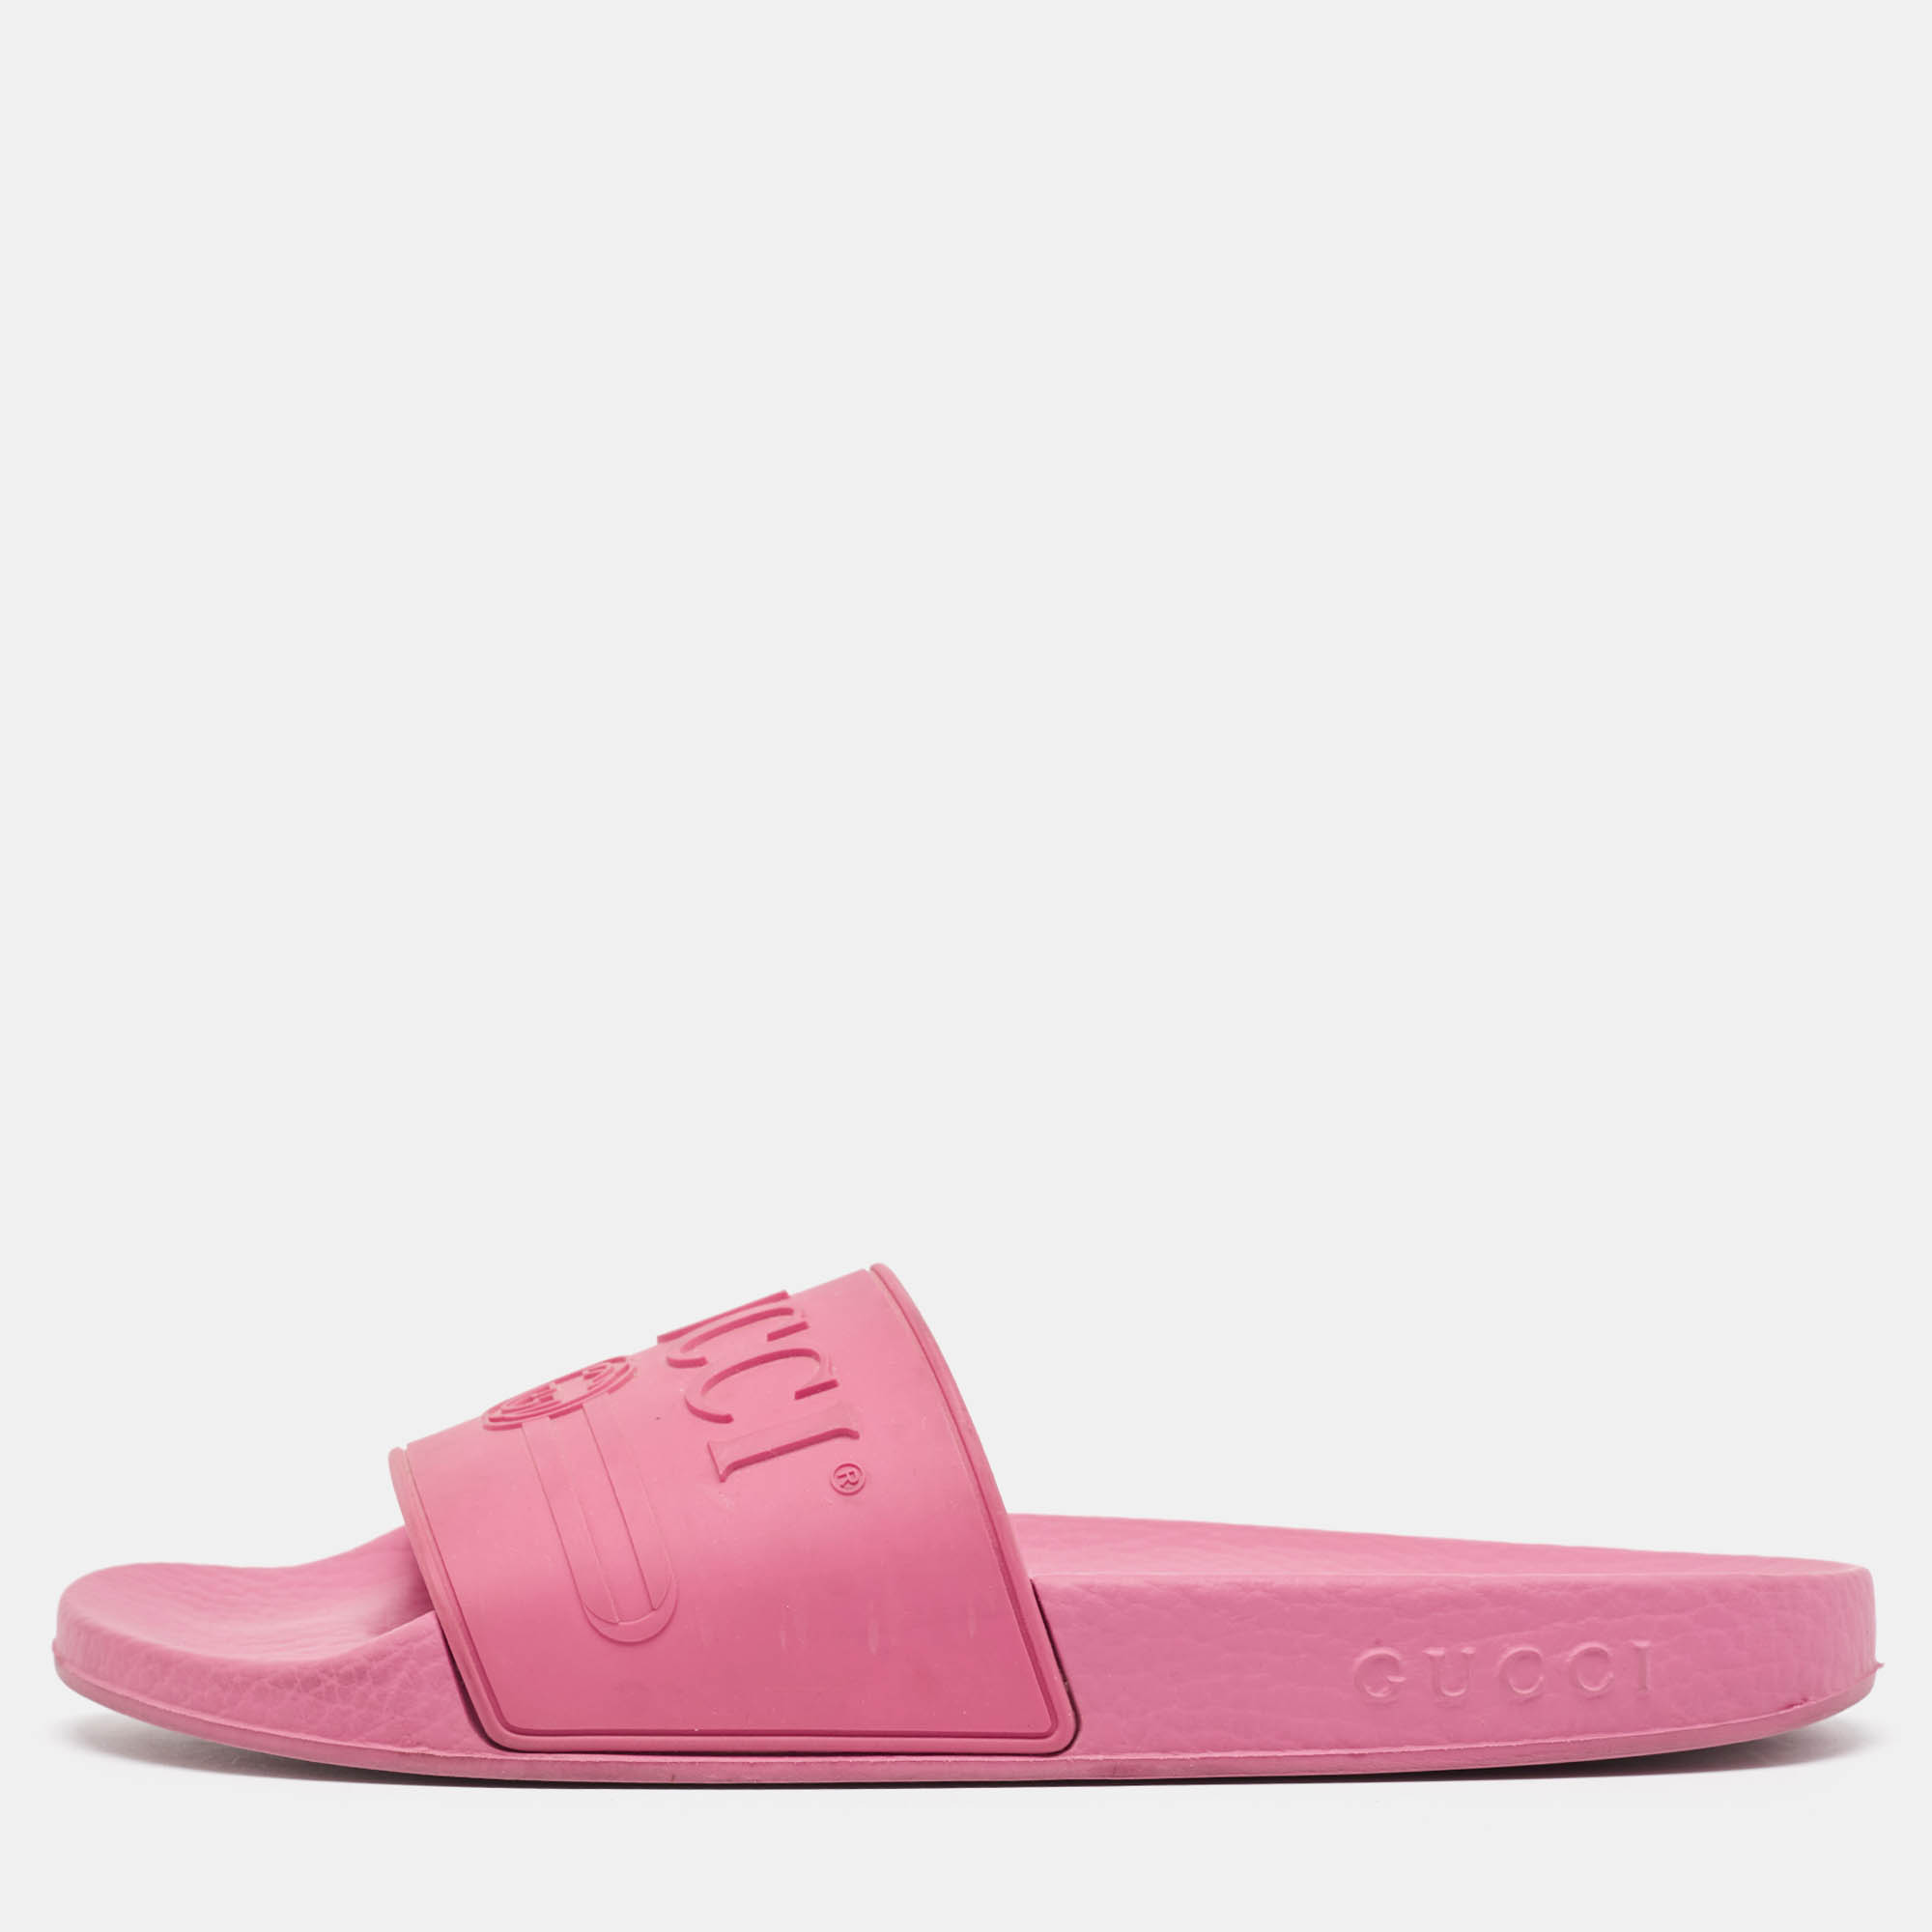 Gucci pink rubber logo pool slides size 38